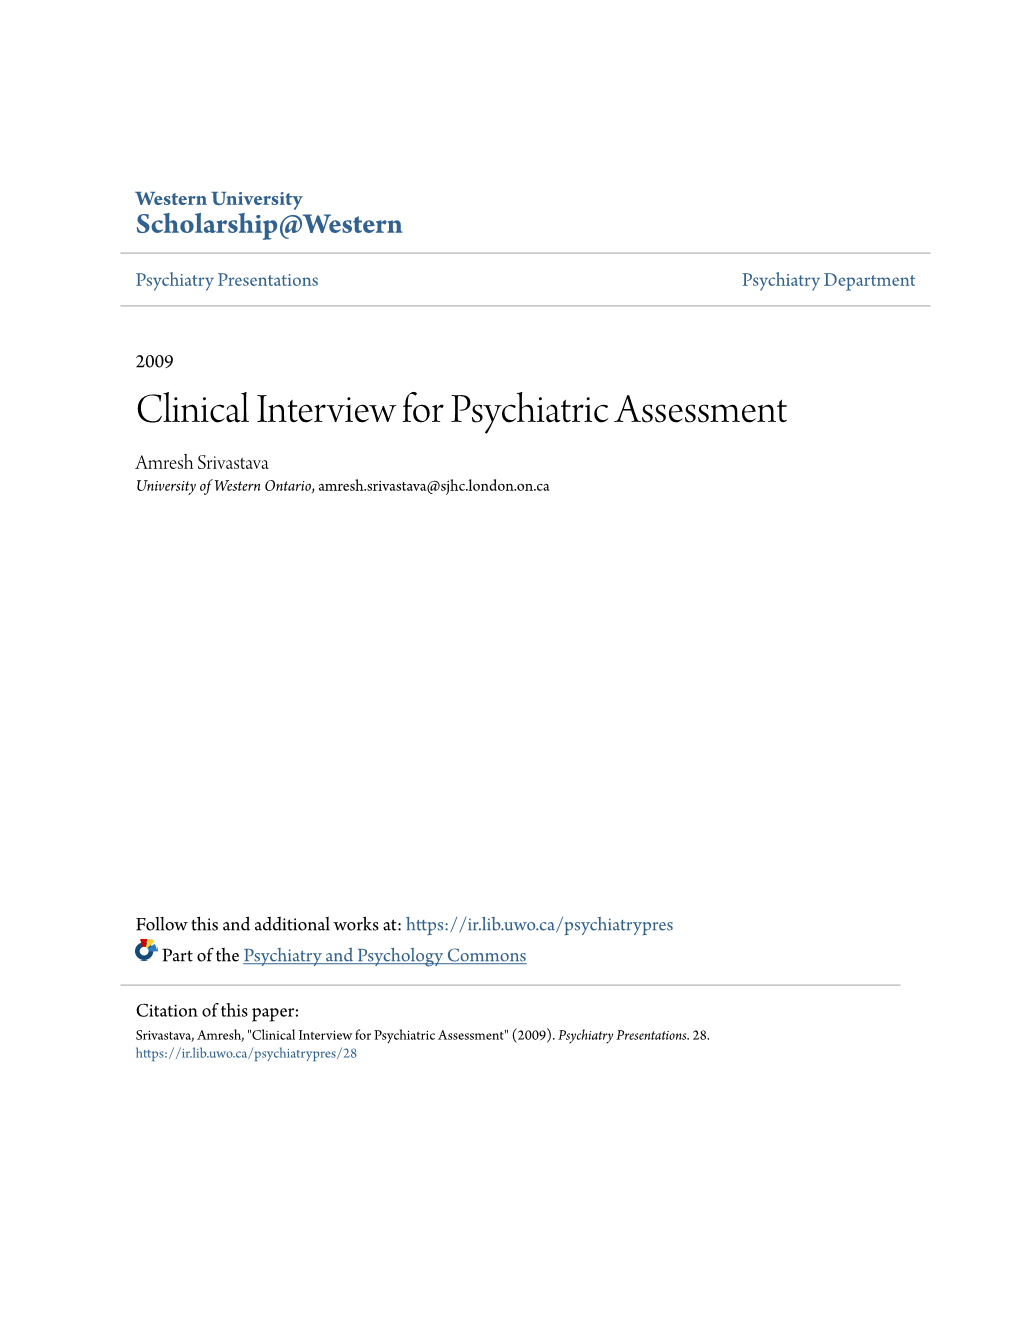 Clinical Interview for Psychiatric Assessment Amresh Srivastava University of Western Ontario, Amresh.Srivastava@Sjhc.London.On.Ca